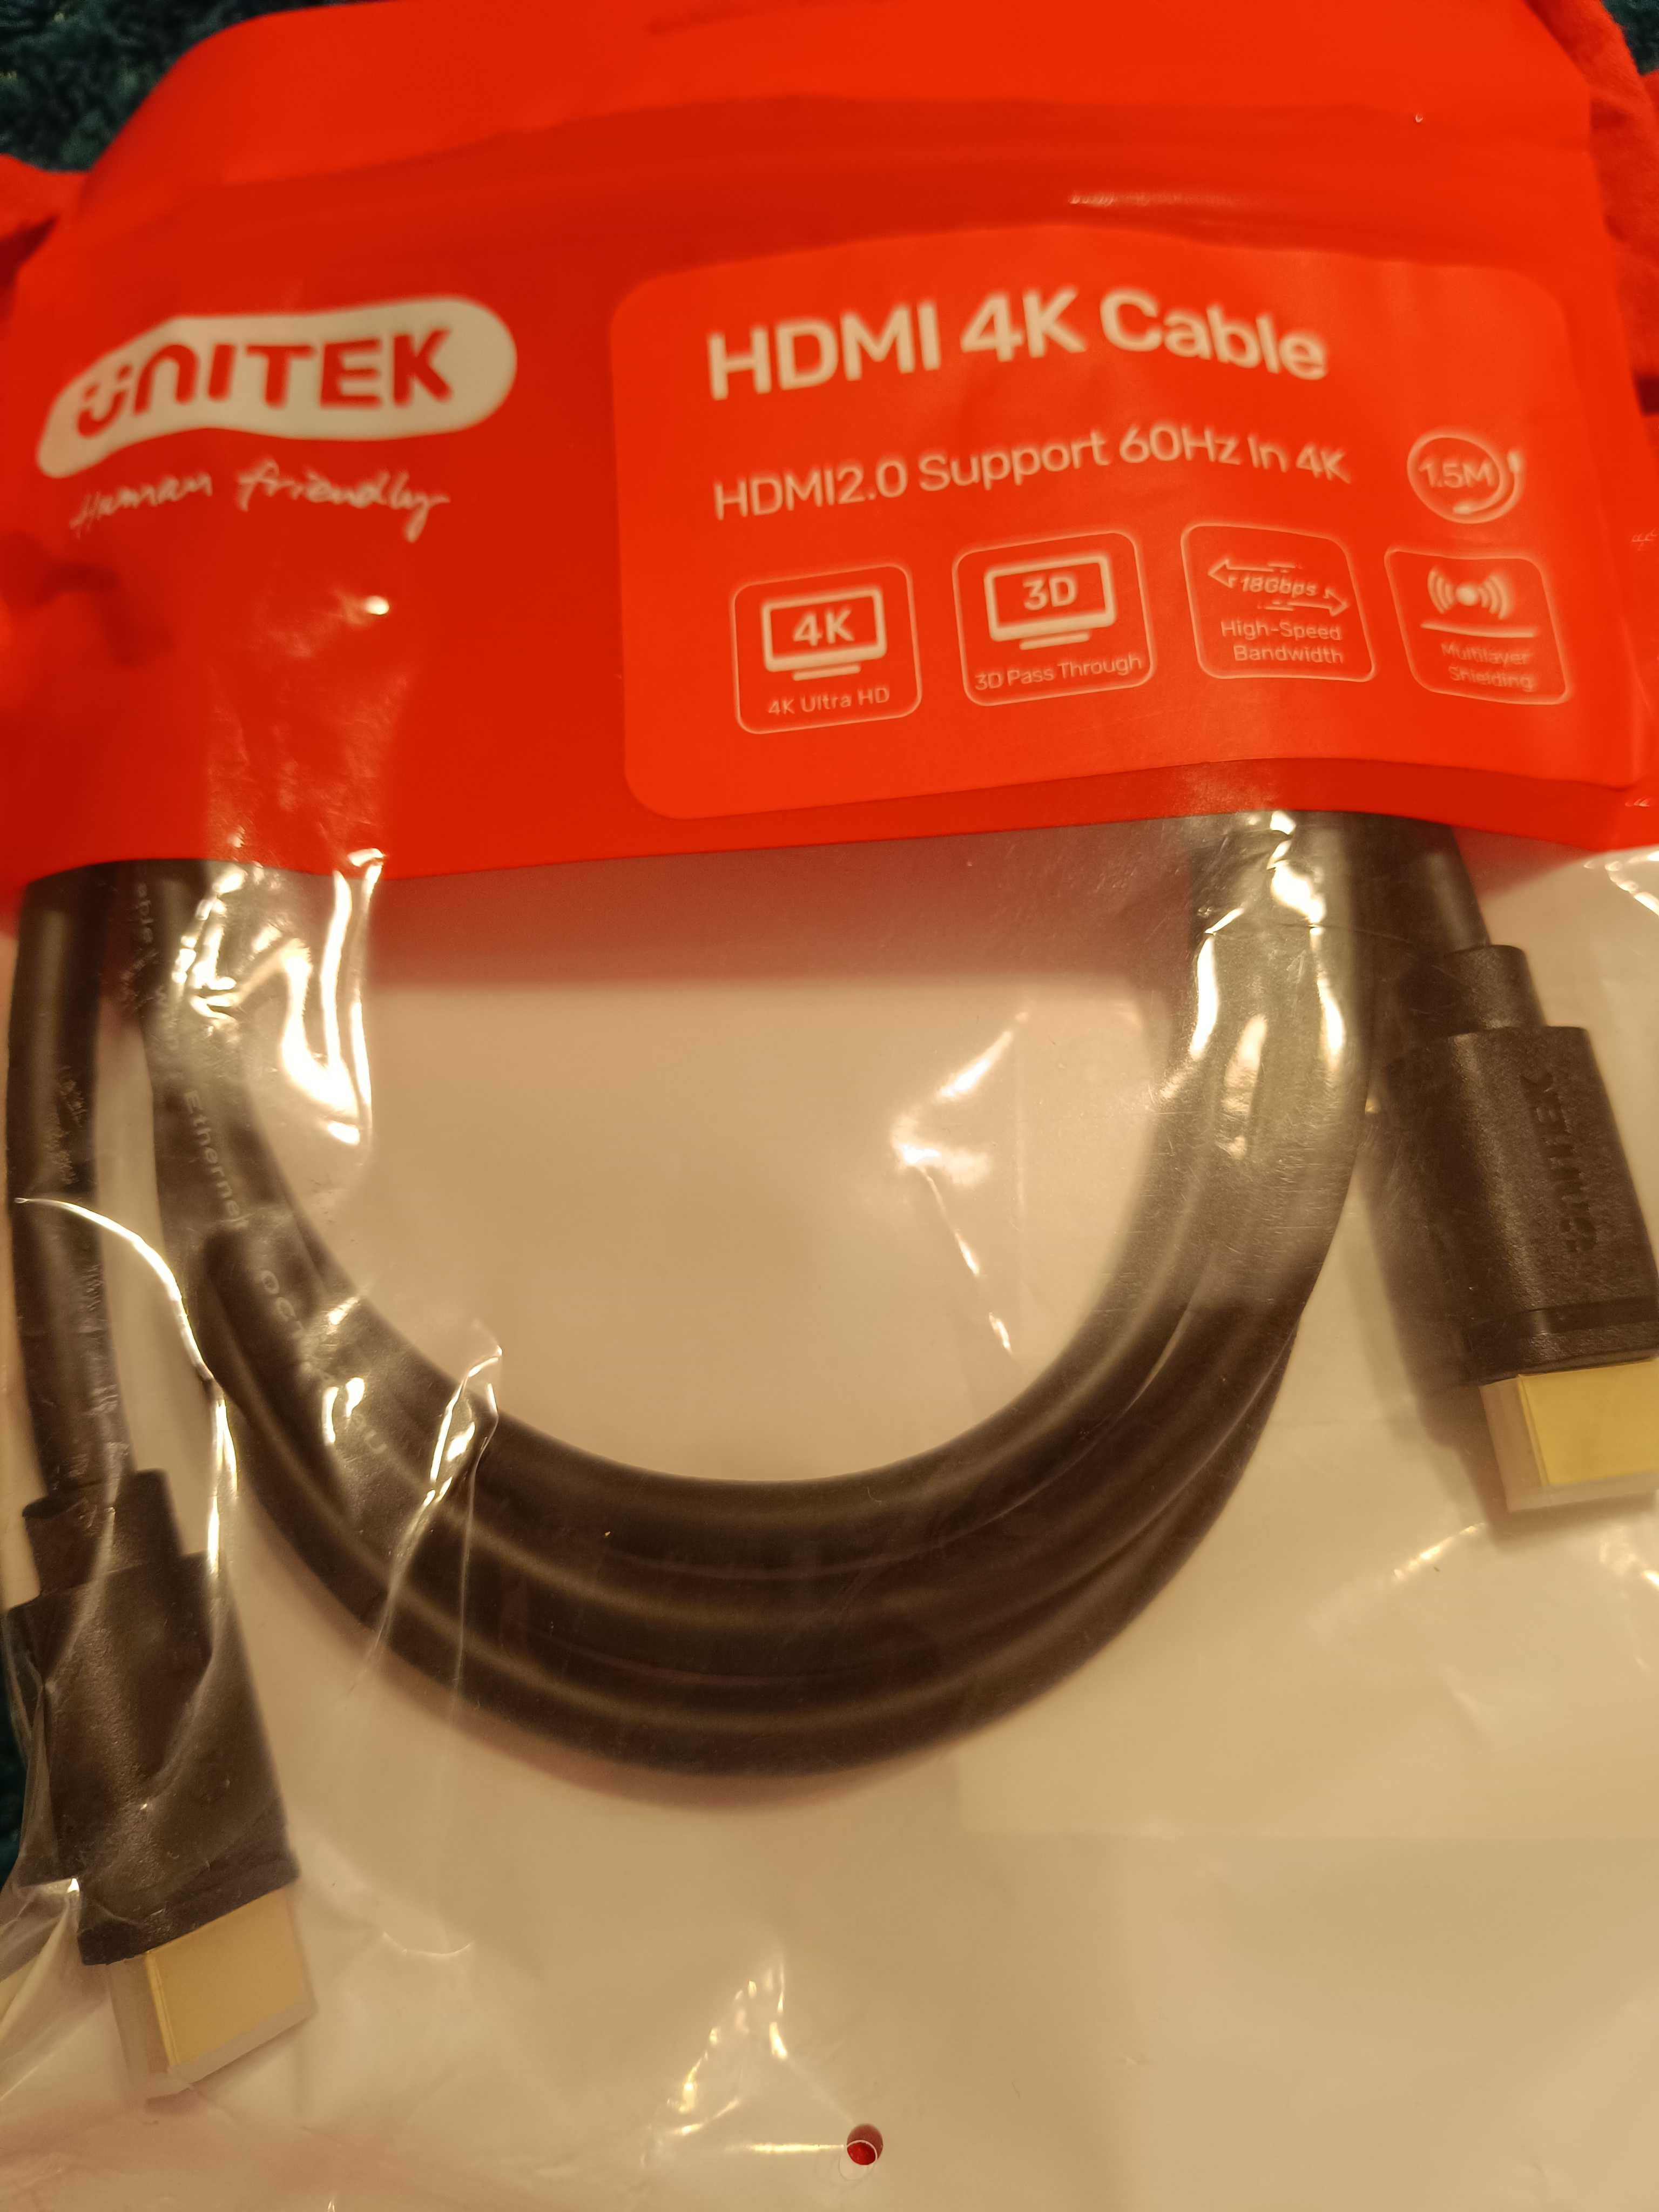 HDMI 4K Cable HDMI 2.0 support 60Hz in 4K 1.5M Unitek